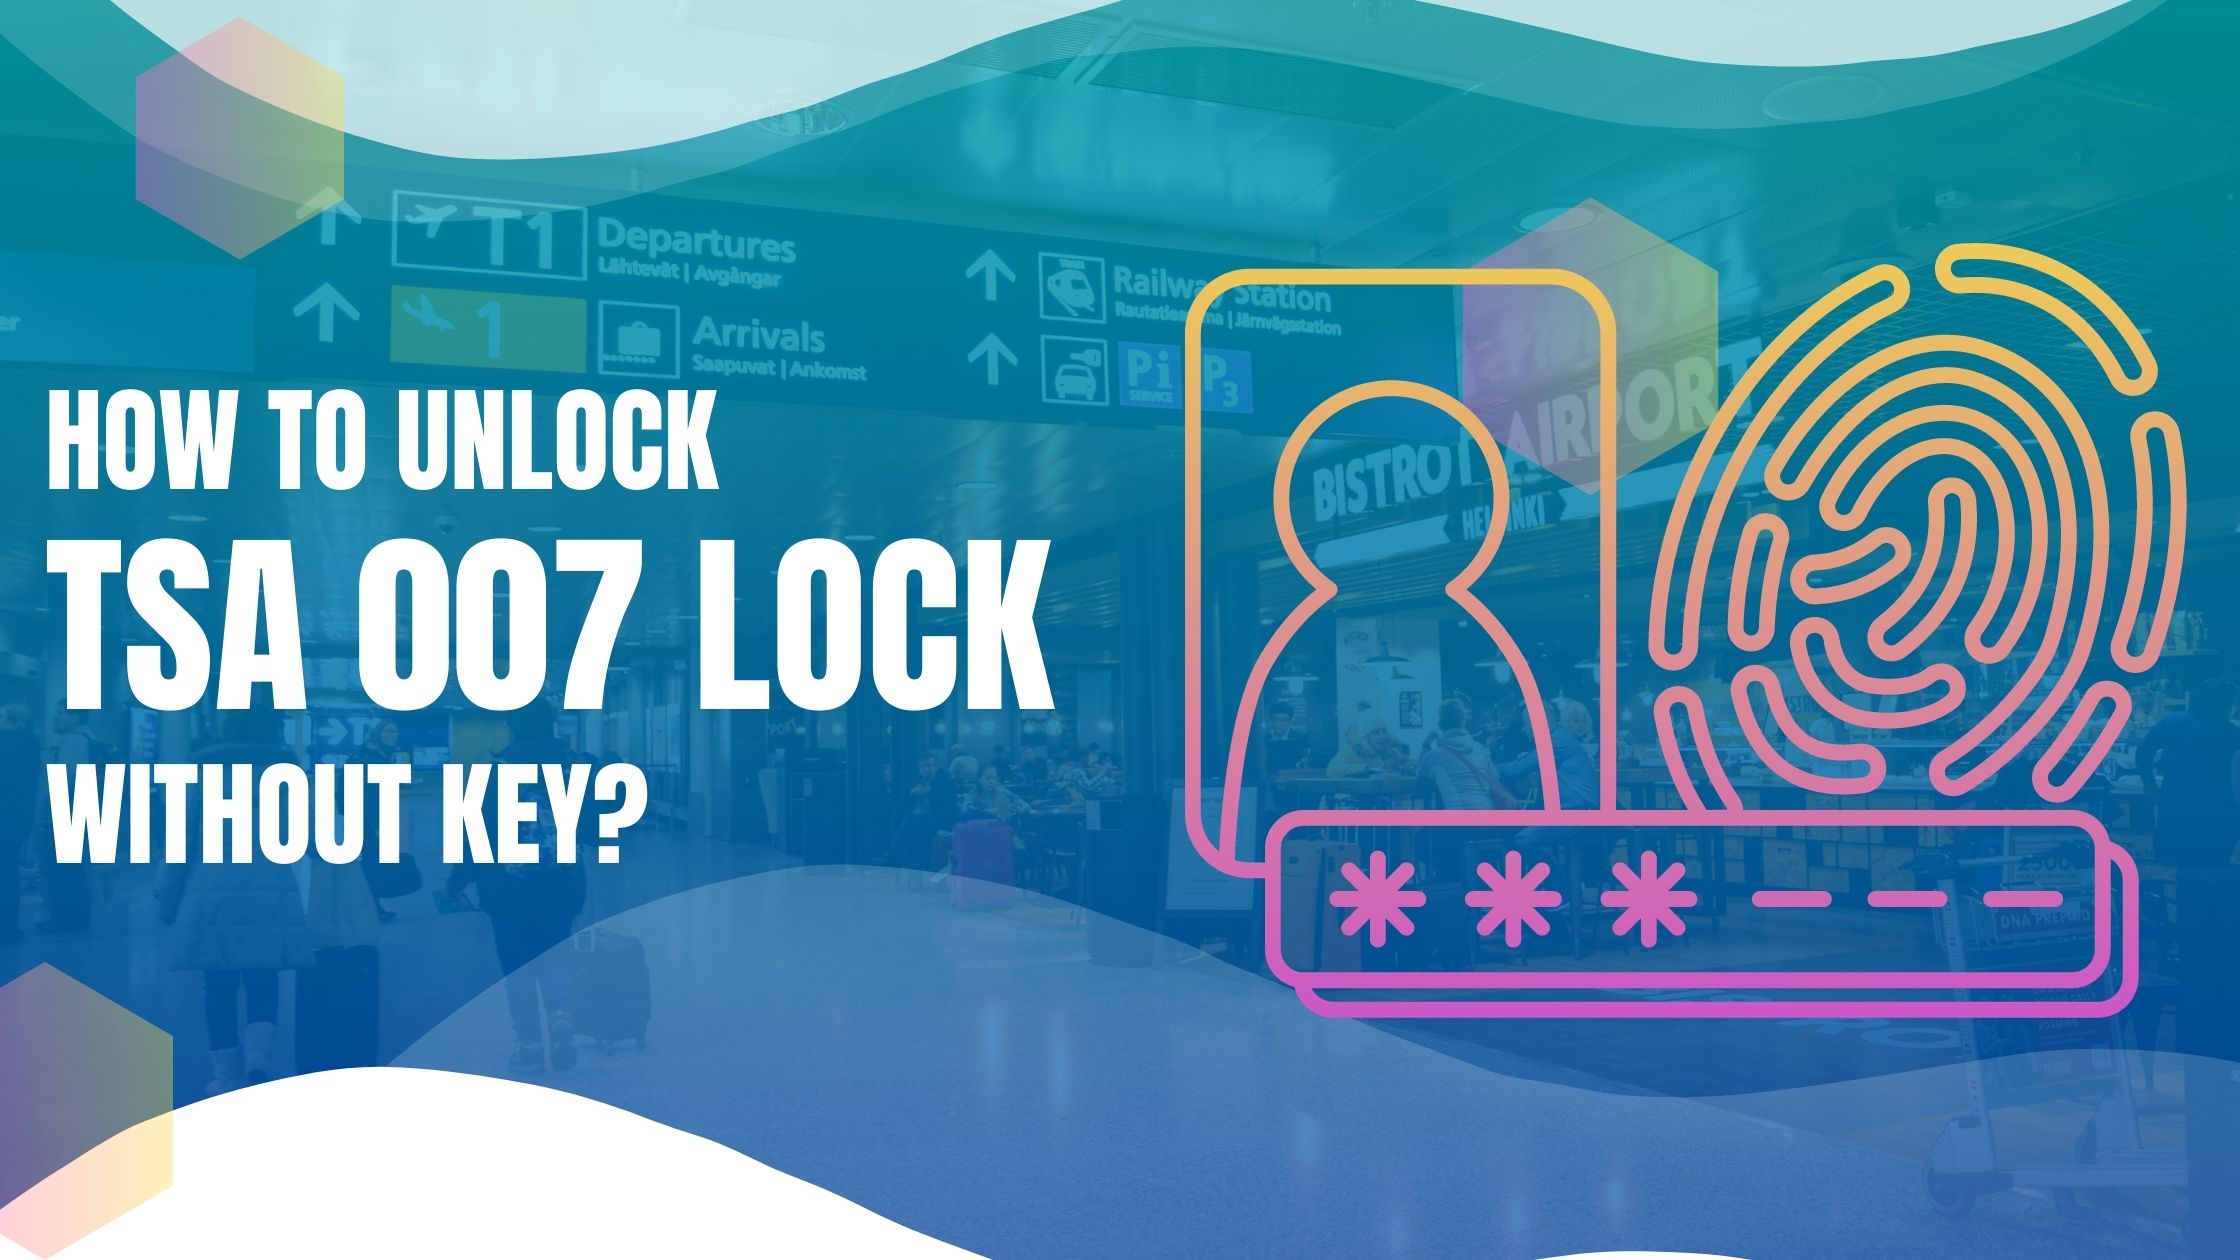 How to Unlock Ergo Suitcase With Combination + How To Change Lock Number -  YouTube | Suitcase lock, Change locks, Unlock